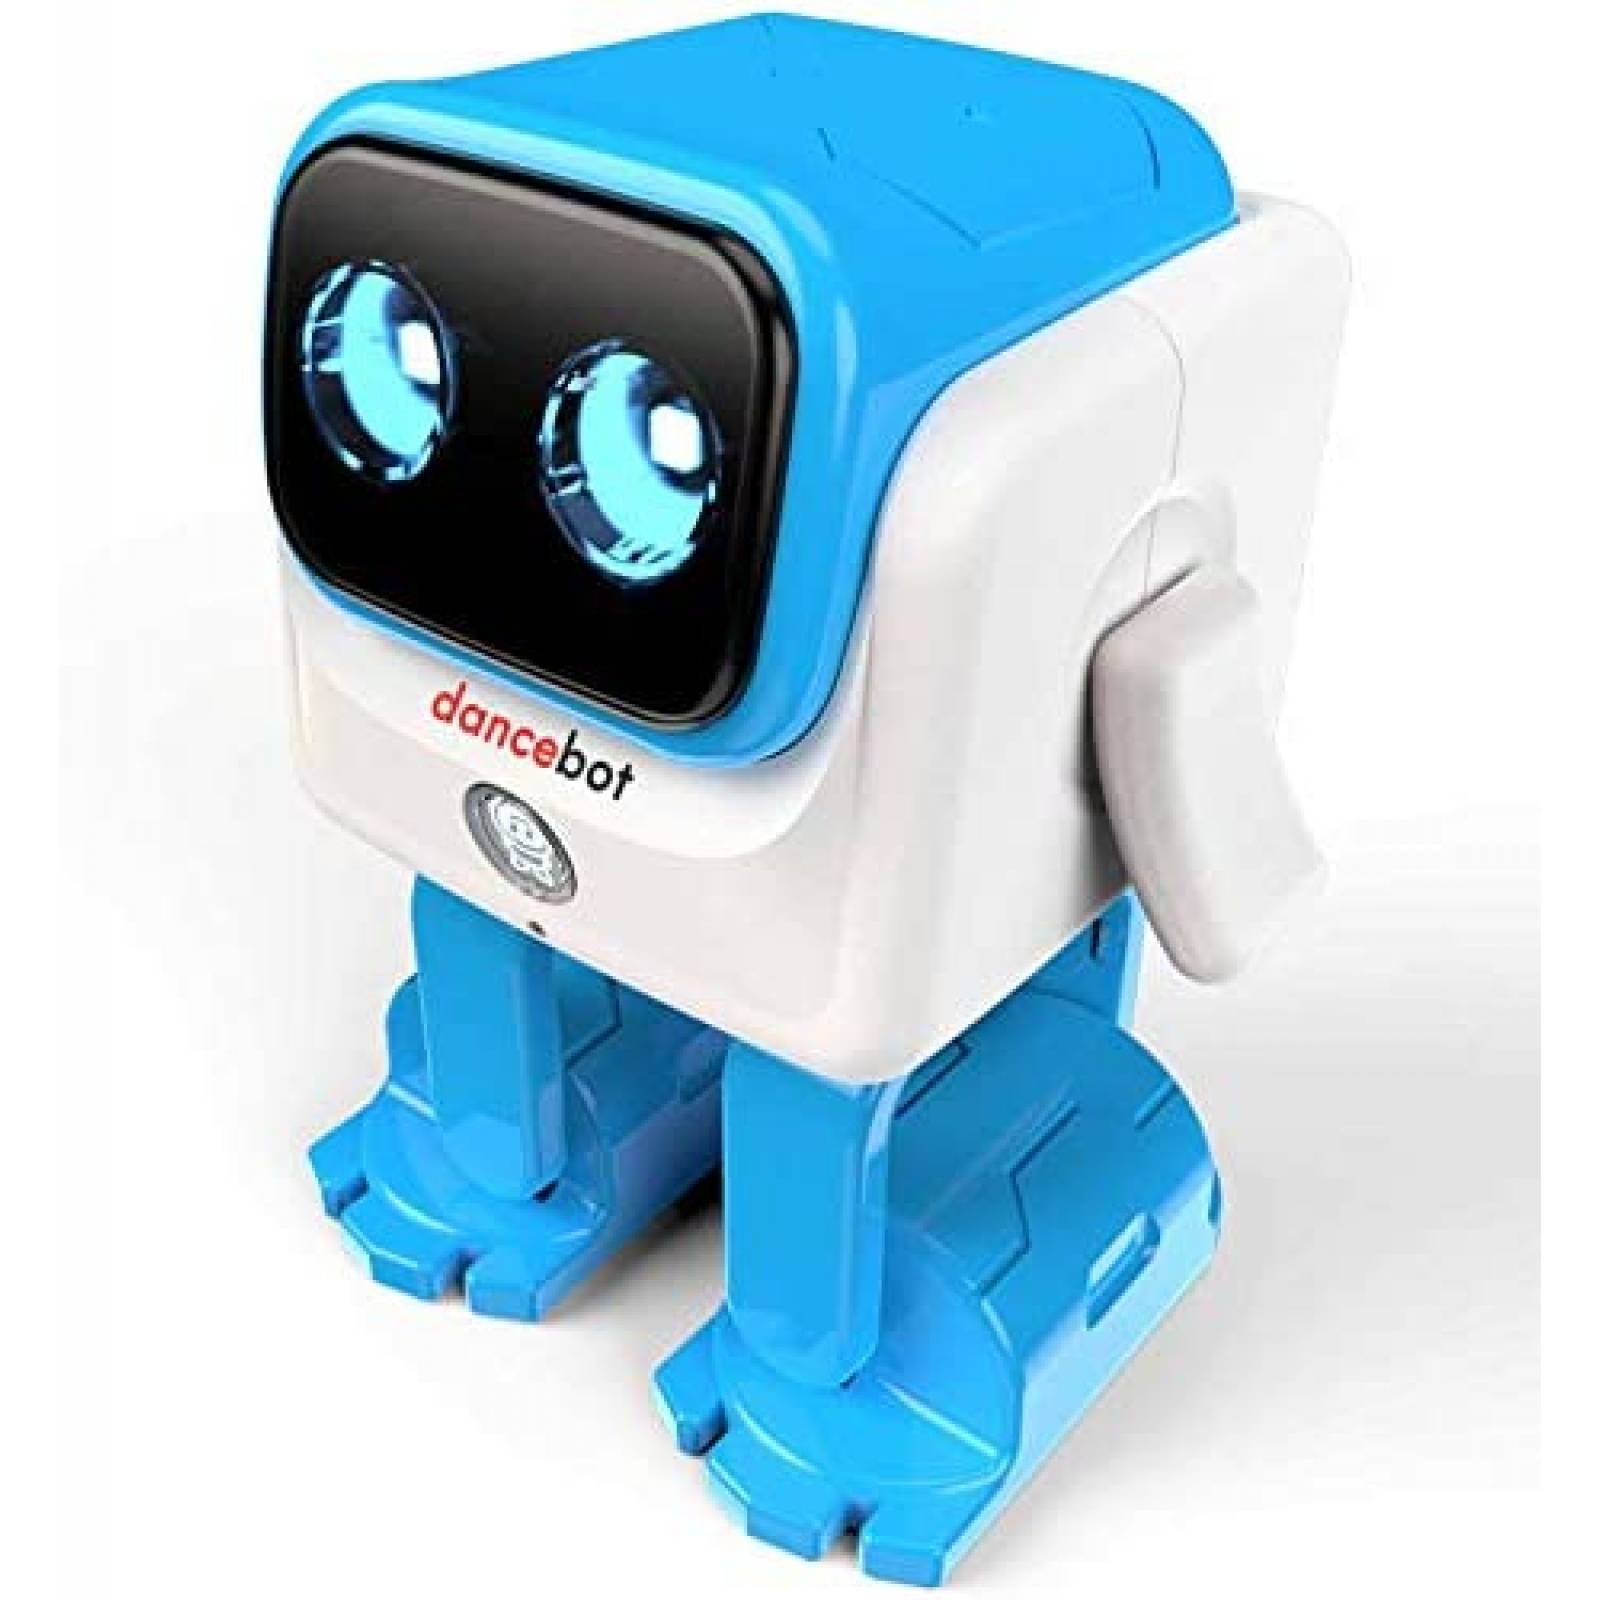 Robot de Juguete ECHEERS Educacional para Niños -Azul